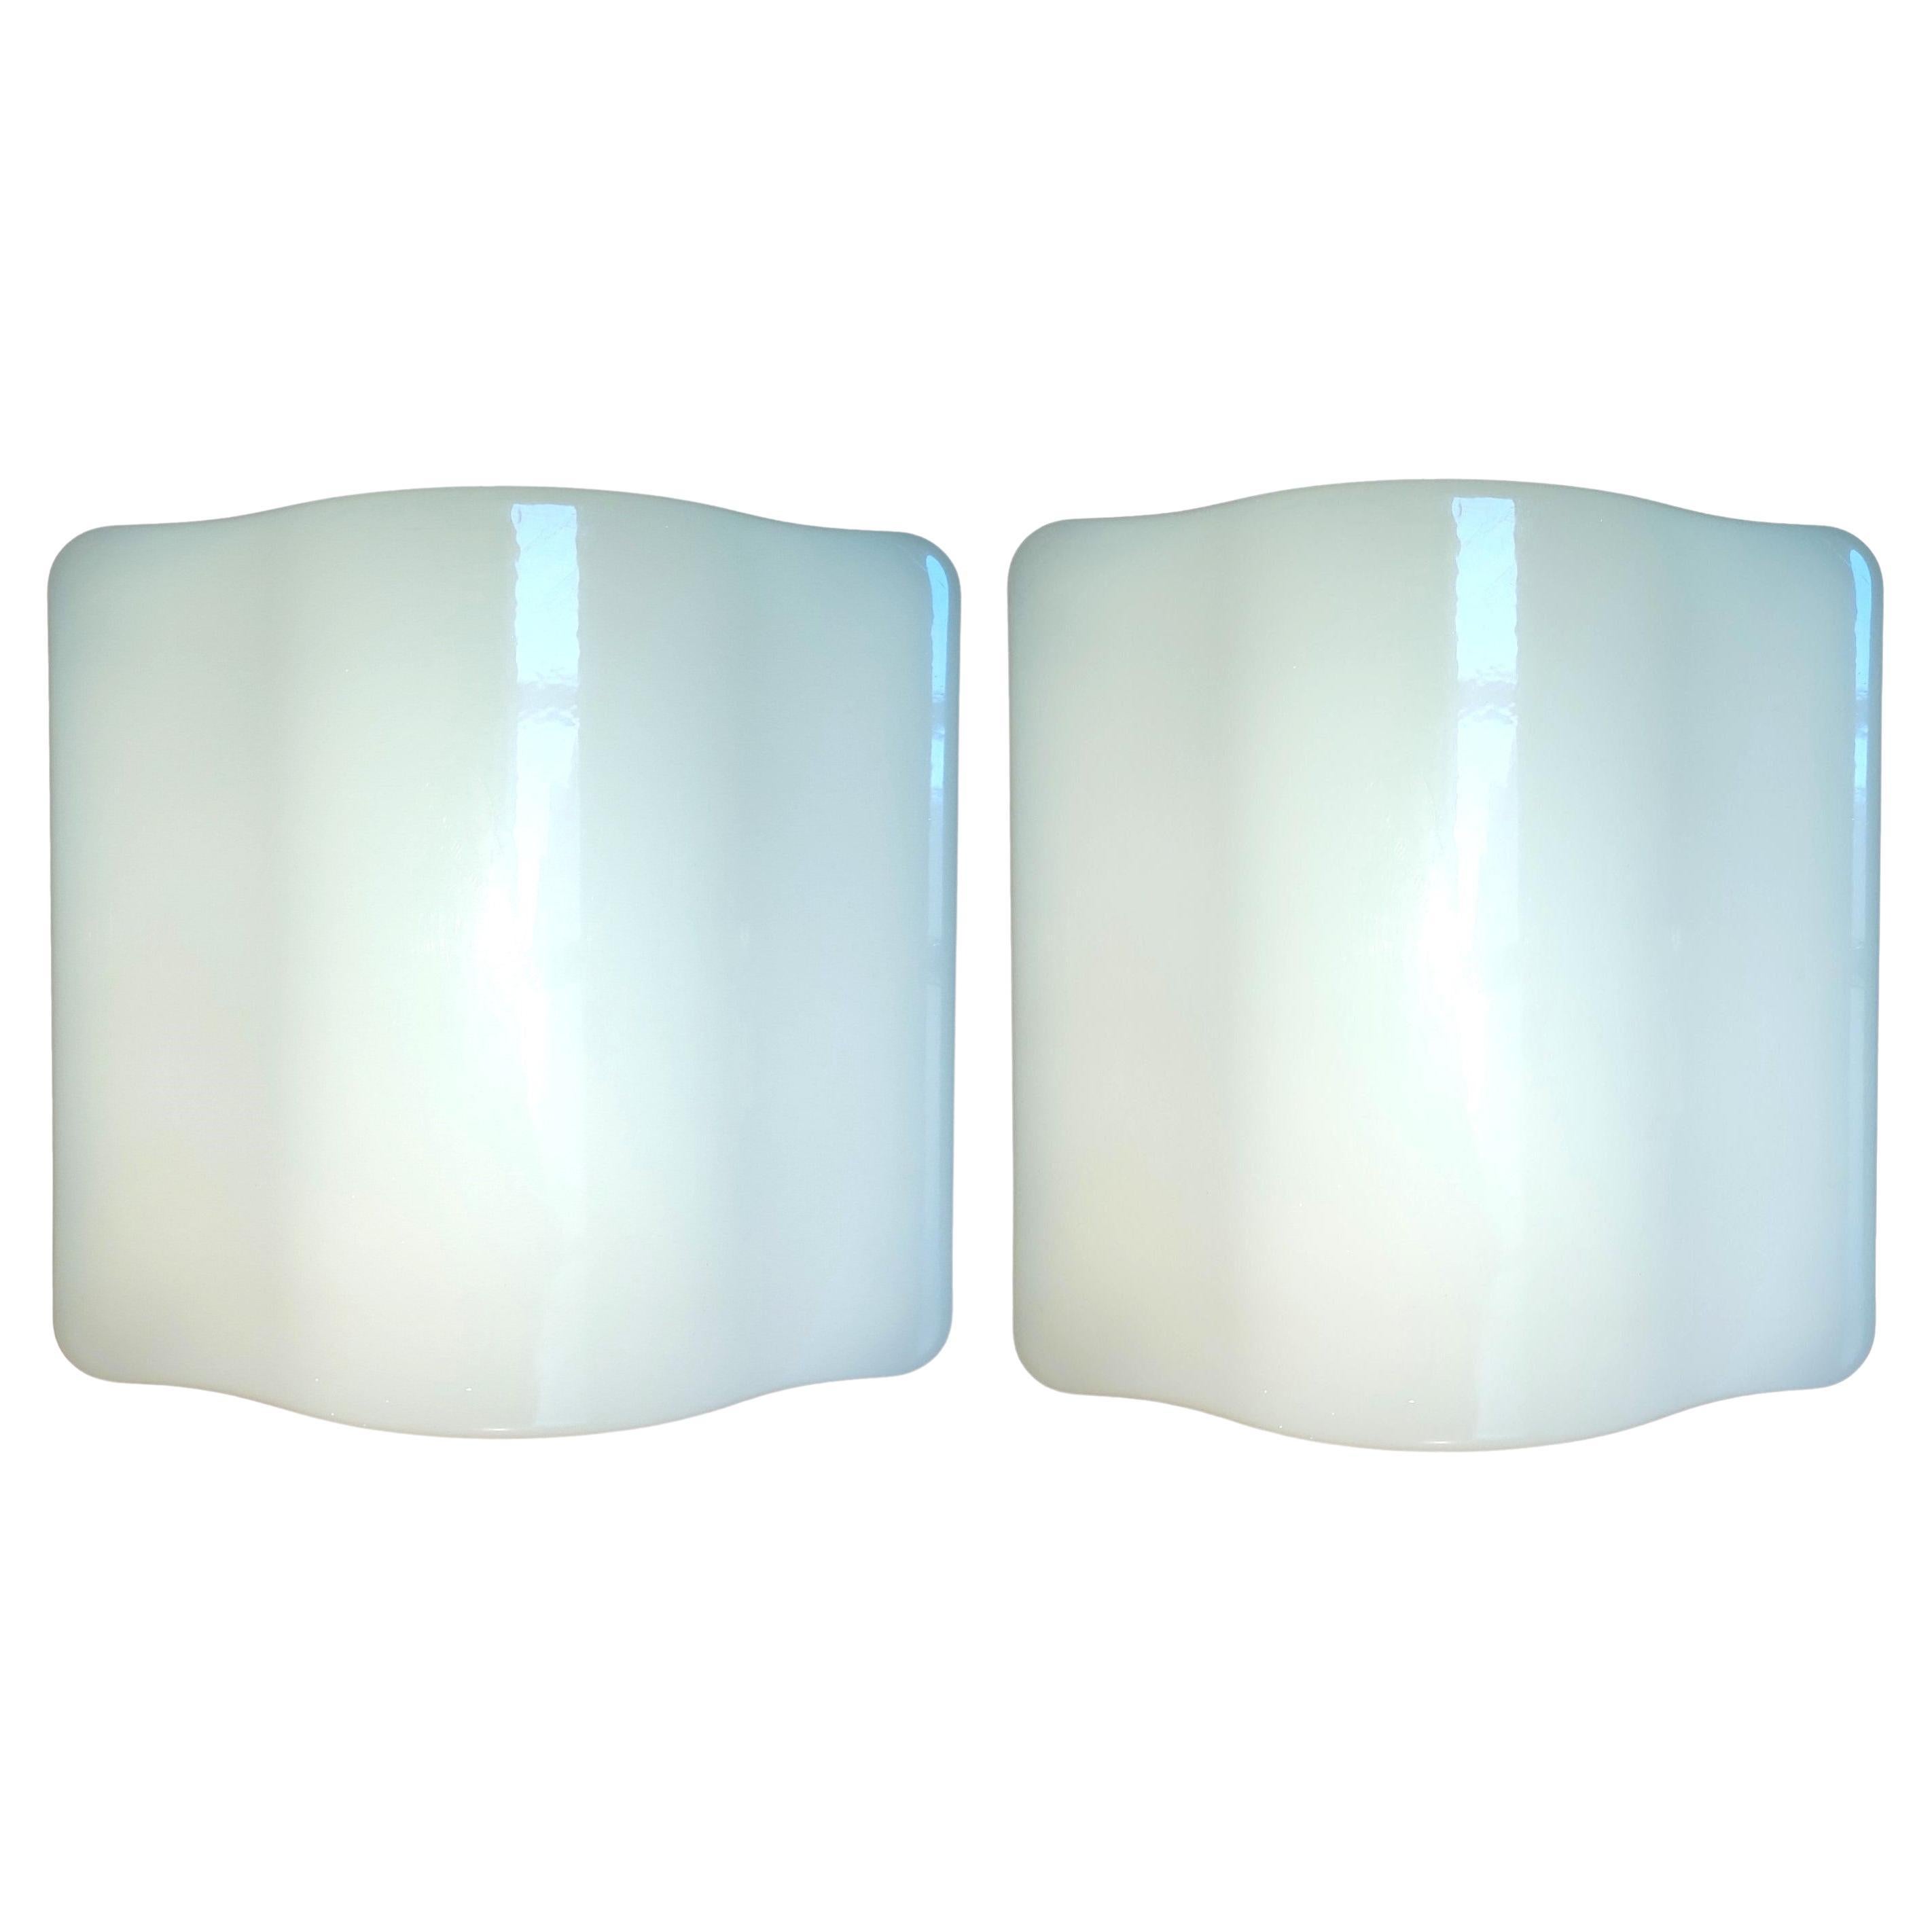 pair of wall sconces iguzzini wall lamps wave model 5359 - guzzini 37x37